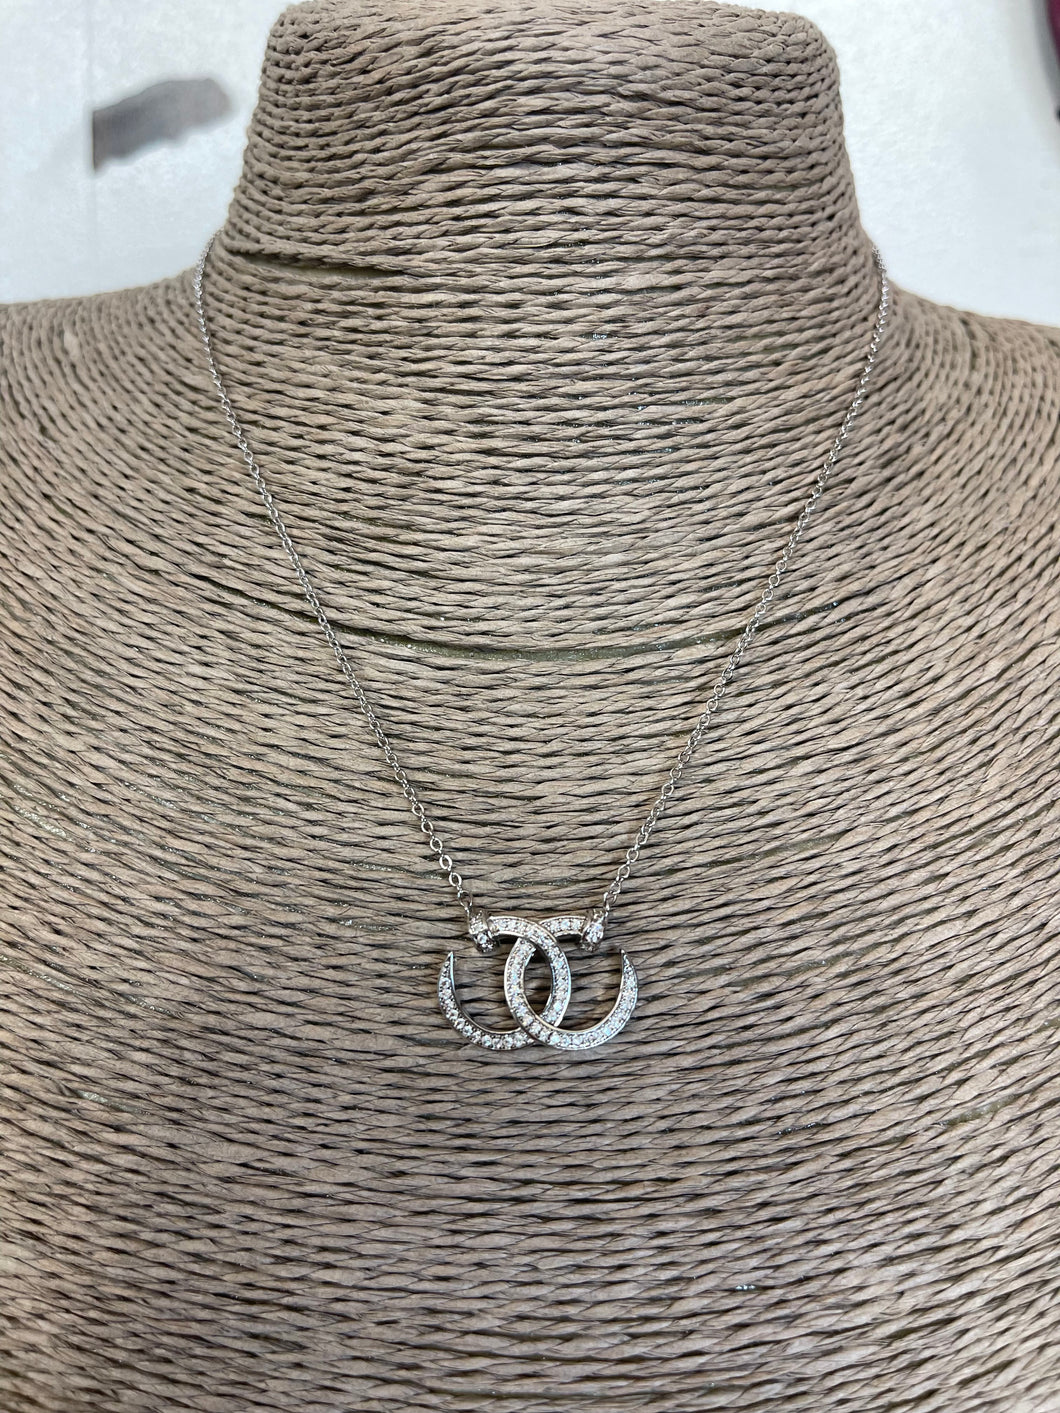 Detailz Bling - Rhinestone Necklaces 5 styles